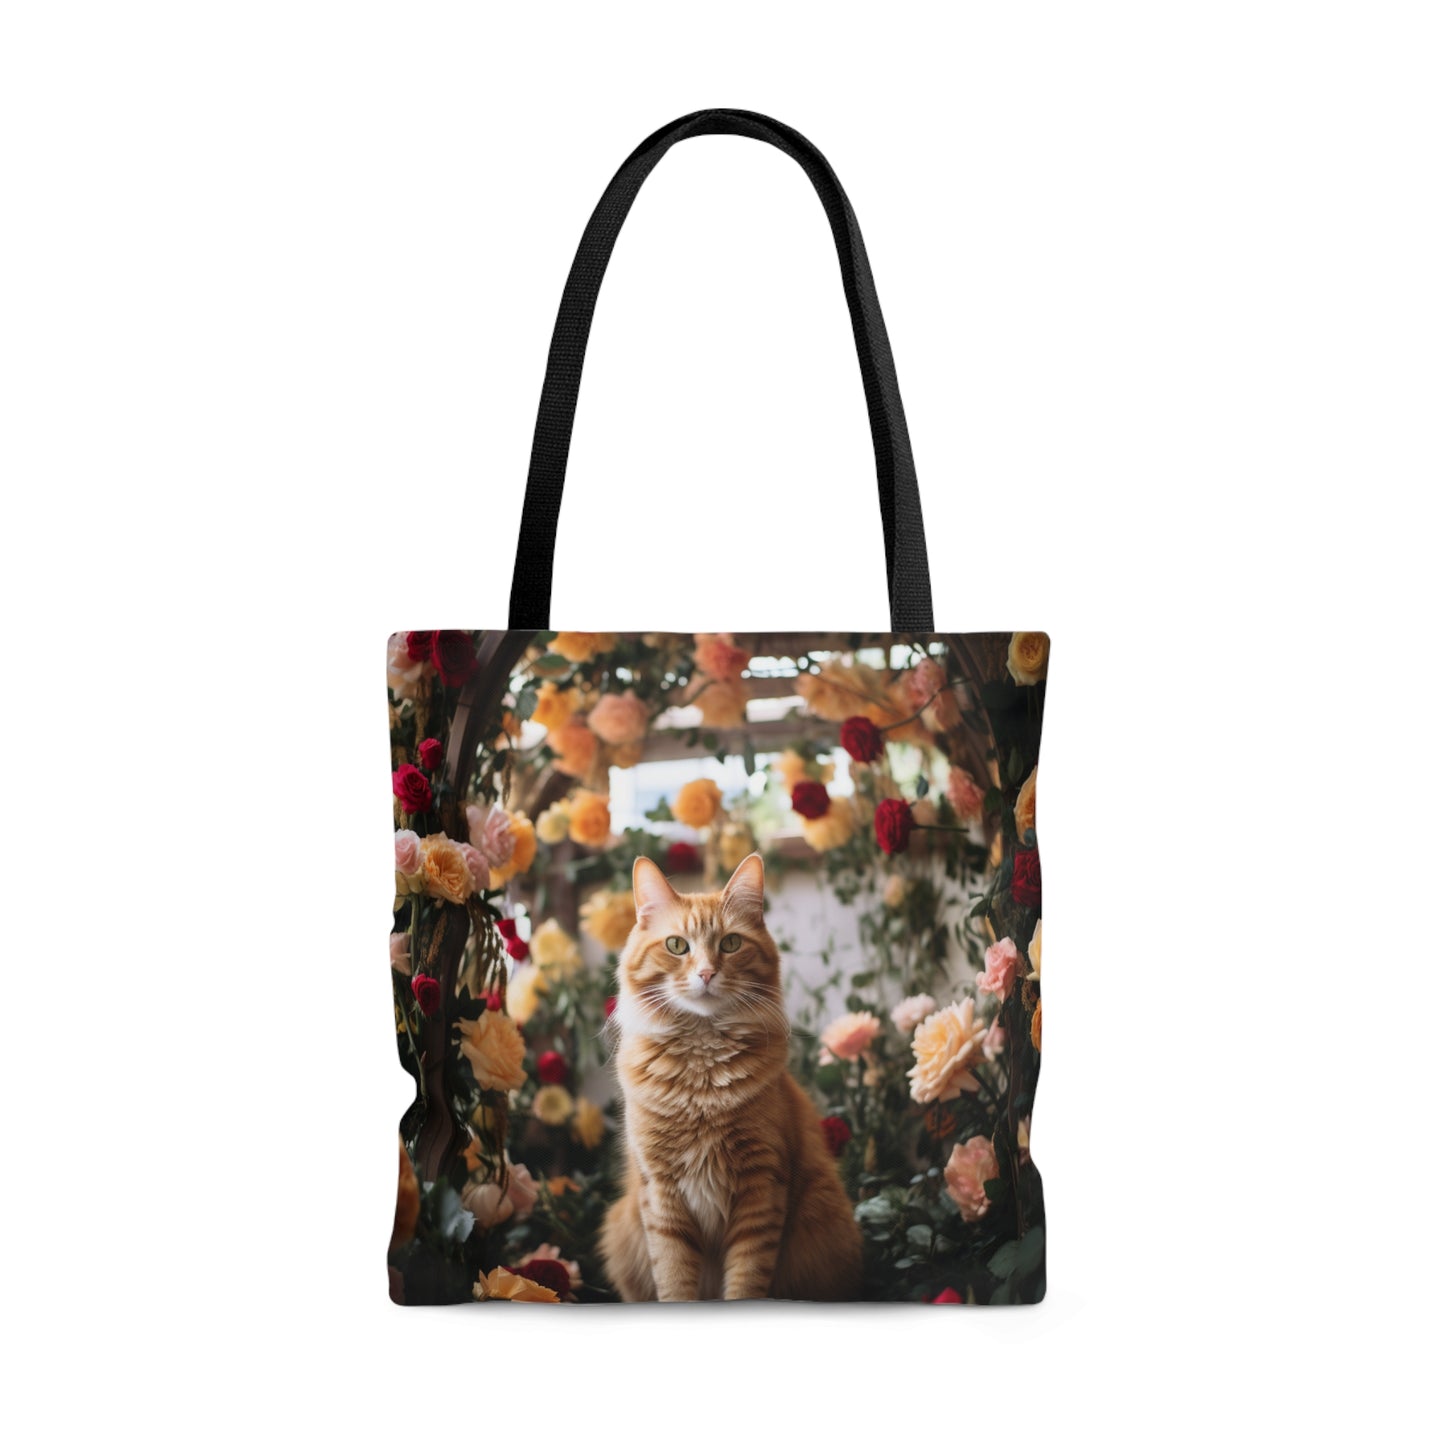 I love my cat - Tote Bag